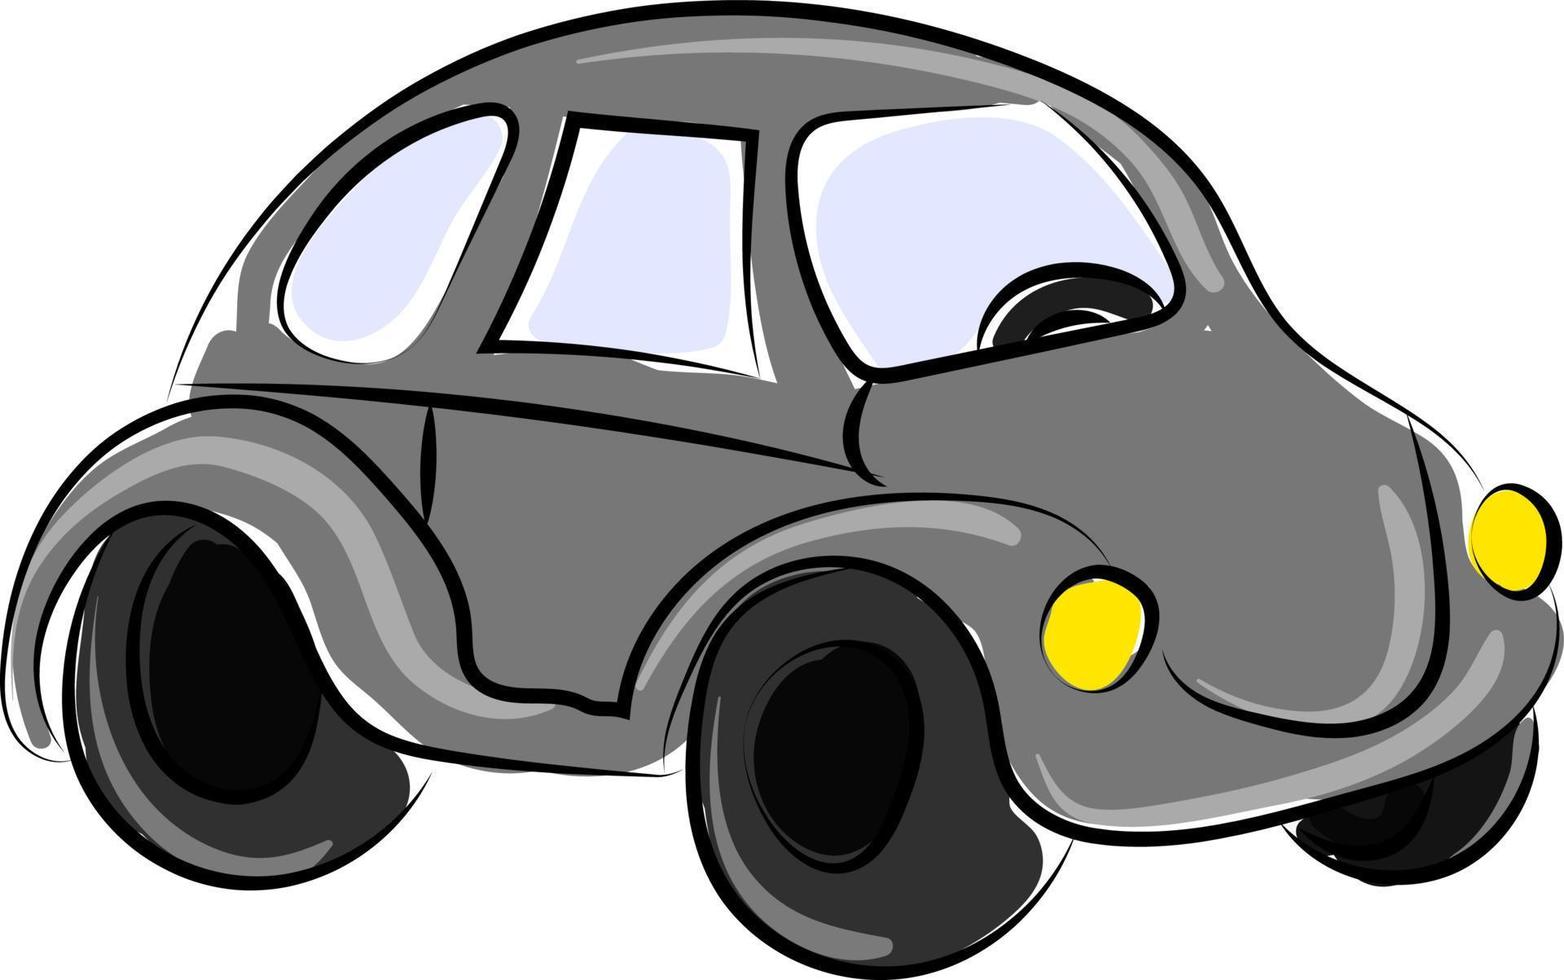 Gray car, illustration, vector on white background.